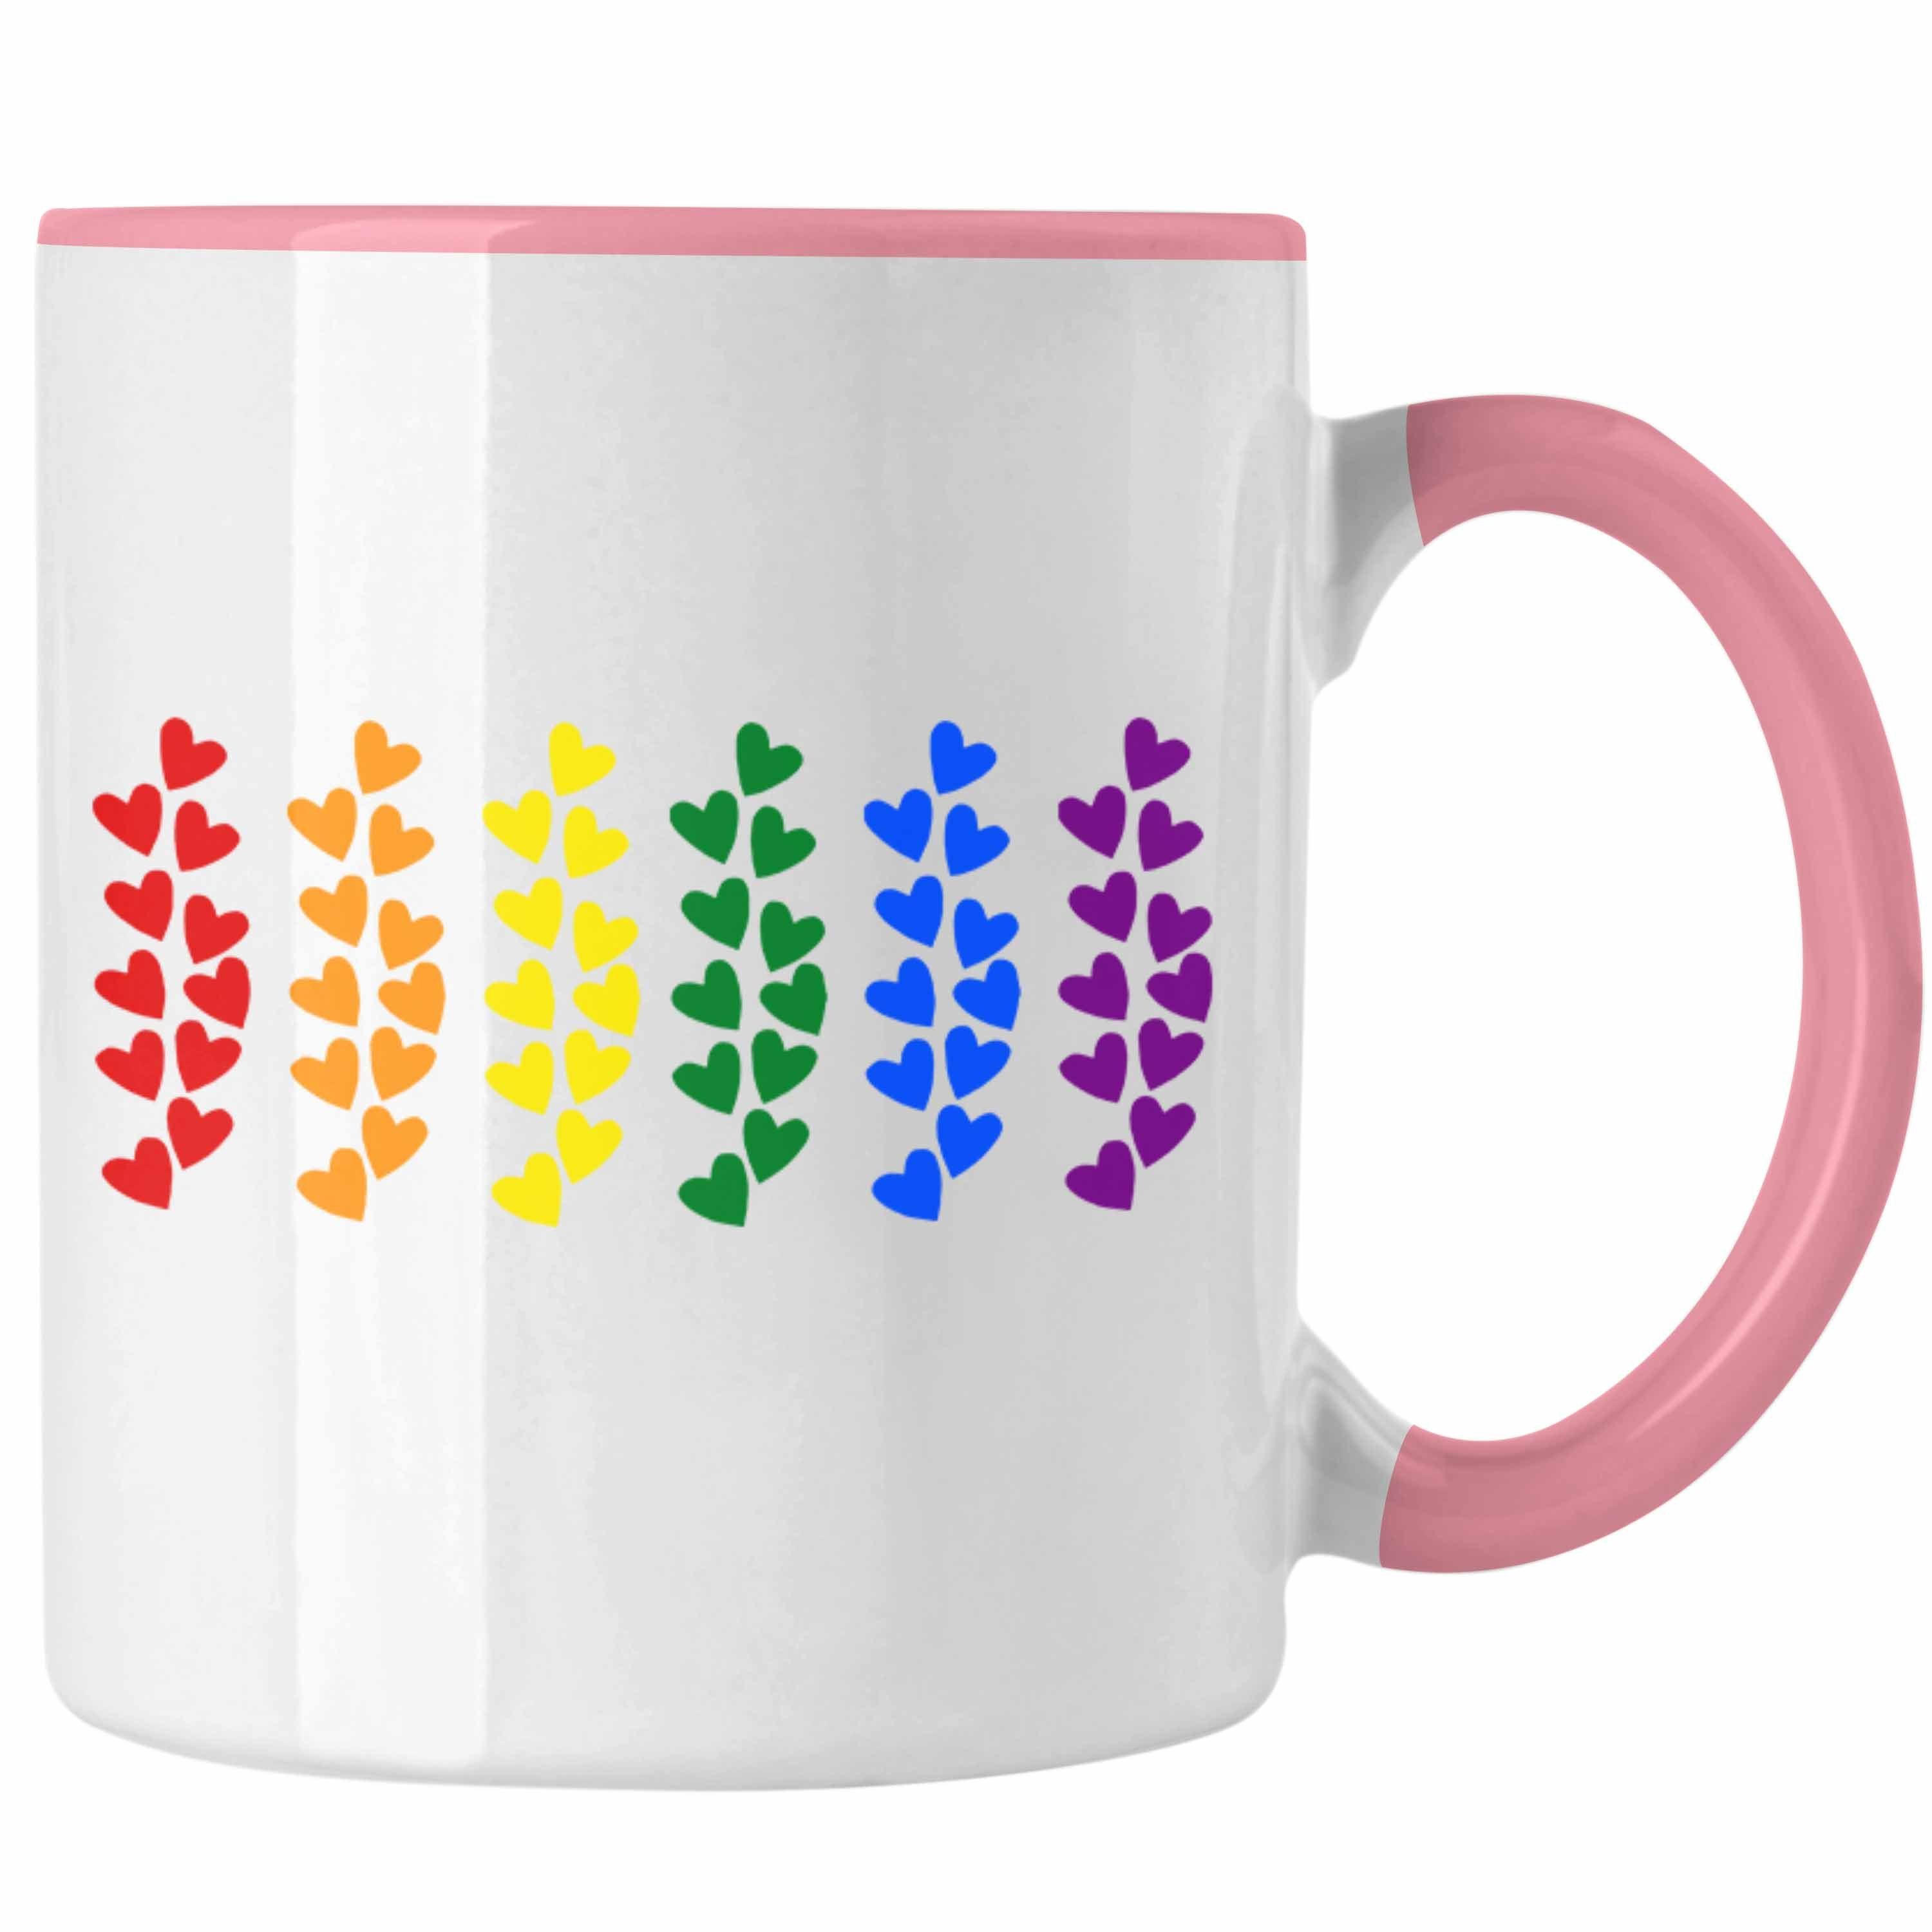 Trendation Tasse Trendation - Regenbogen Tasse Geschenk LGBT Schwule Lesben Transgender Grafik Pride Herzen Flagge Rosa